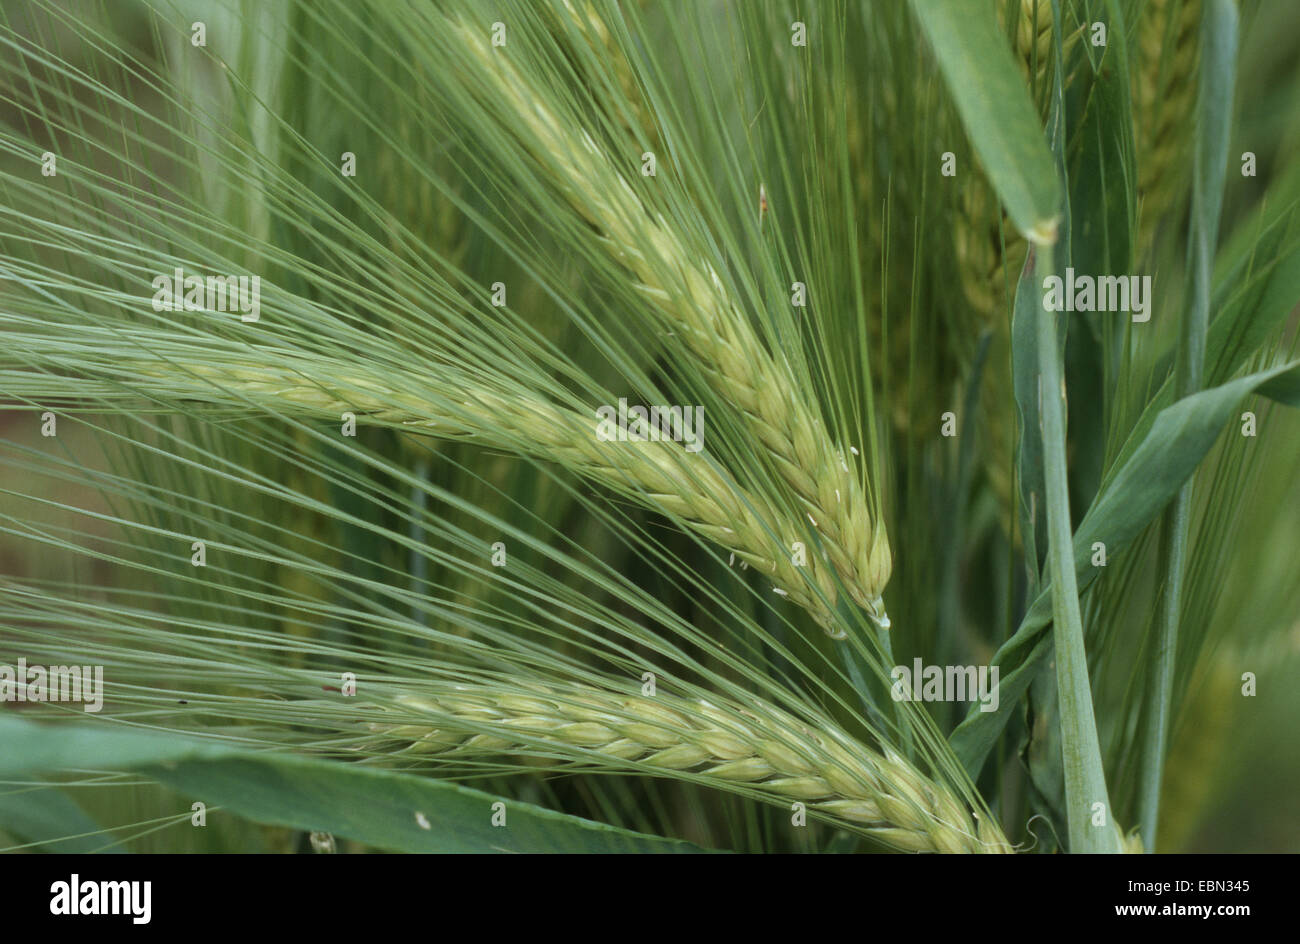 barley (Hordeum distichon var. nudum, Hordeum vulgare ssp. distichon var. nudum), spikes Stock Photo